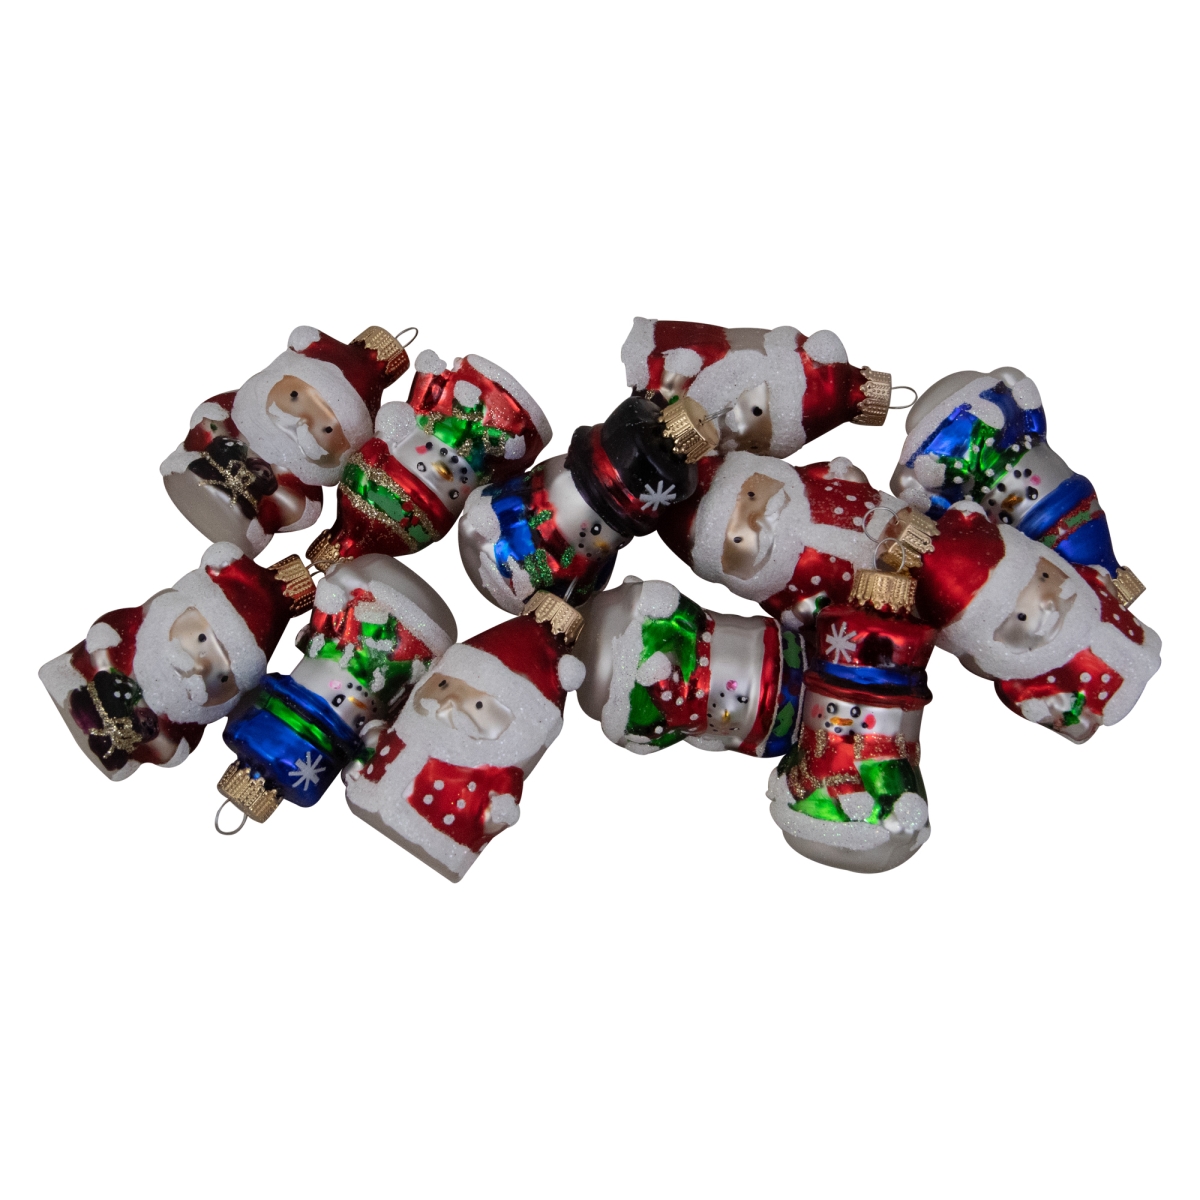 Northlight 32815883 2 in. Assorted Winter Snowmen & Santa Claus Christmas Figurine Ornament Set - 12 Count